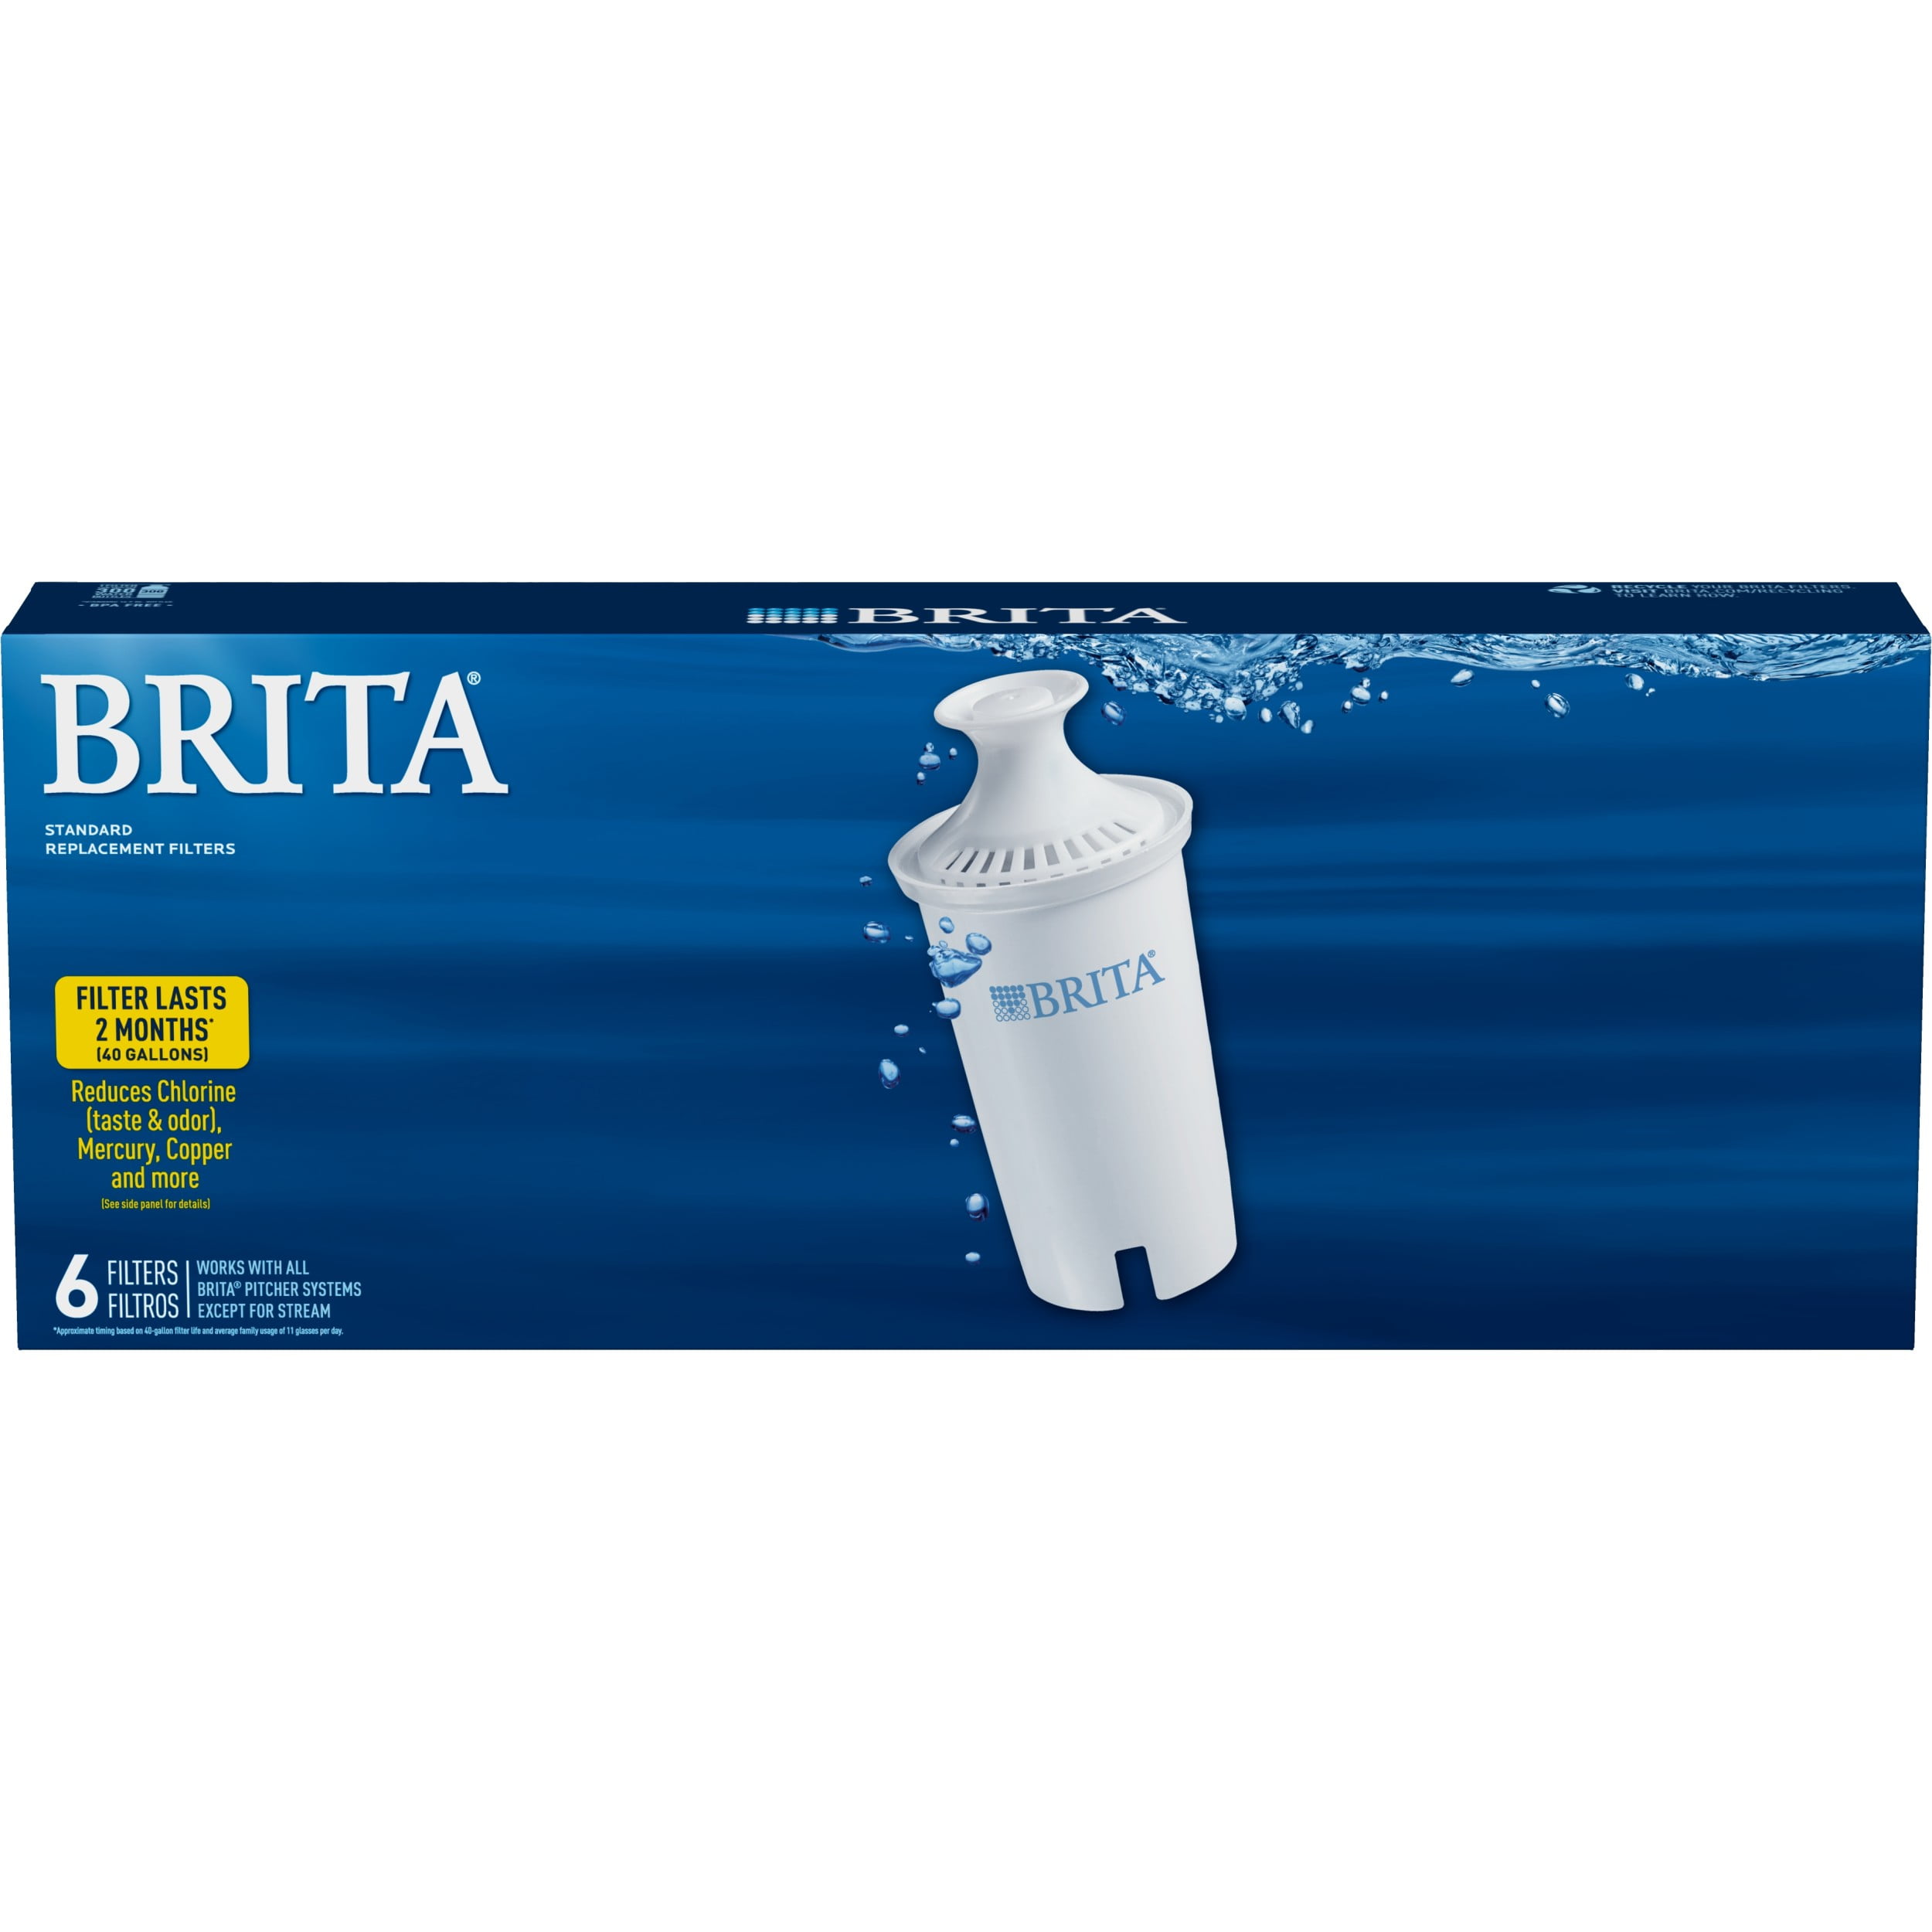 Brita Brita Standard Replacement Filter 3 Pack New Sealed Box 